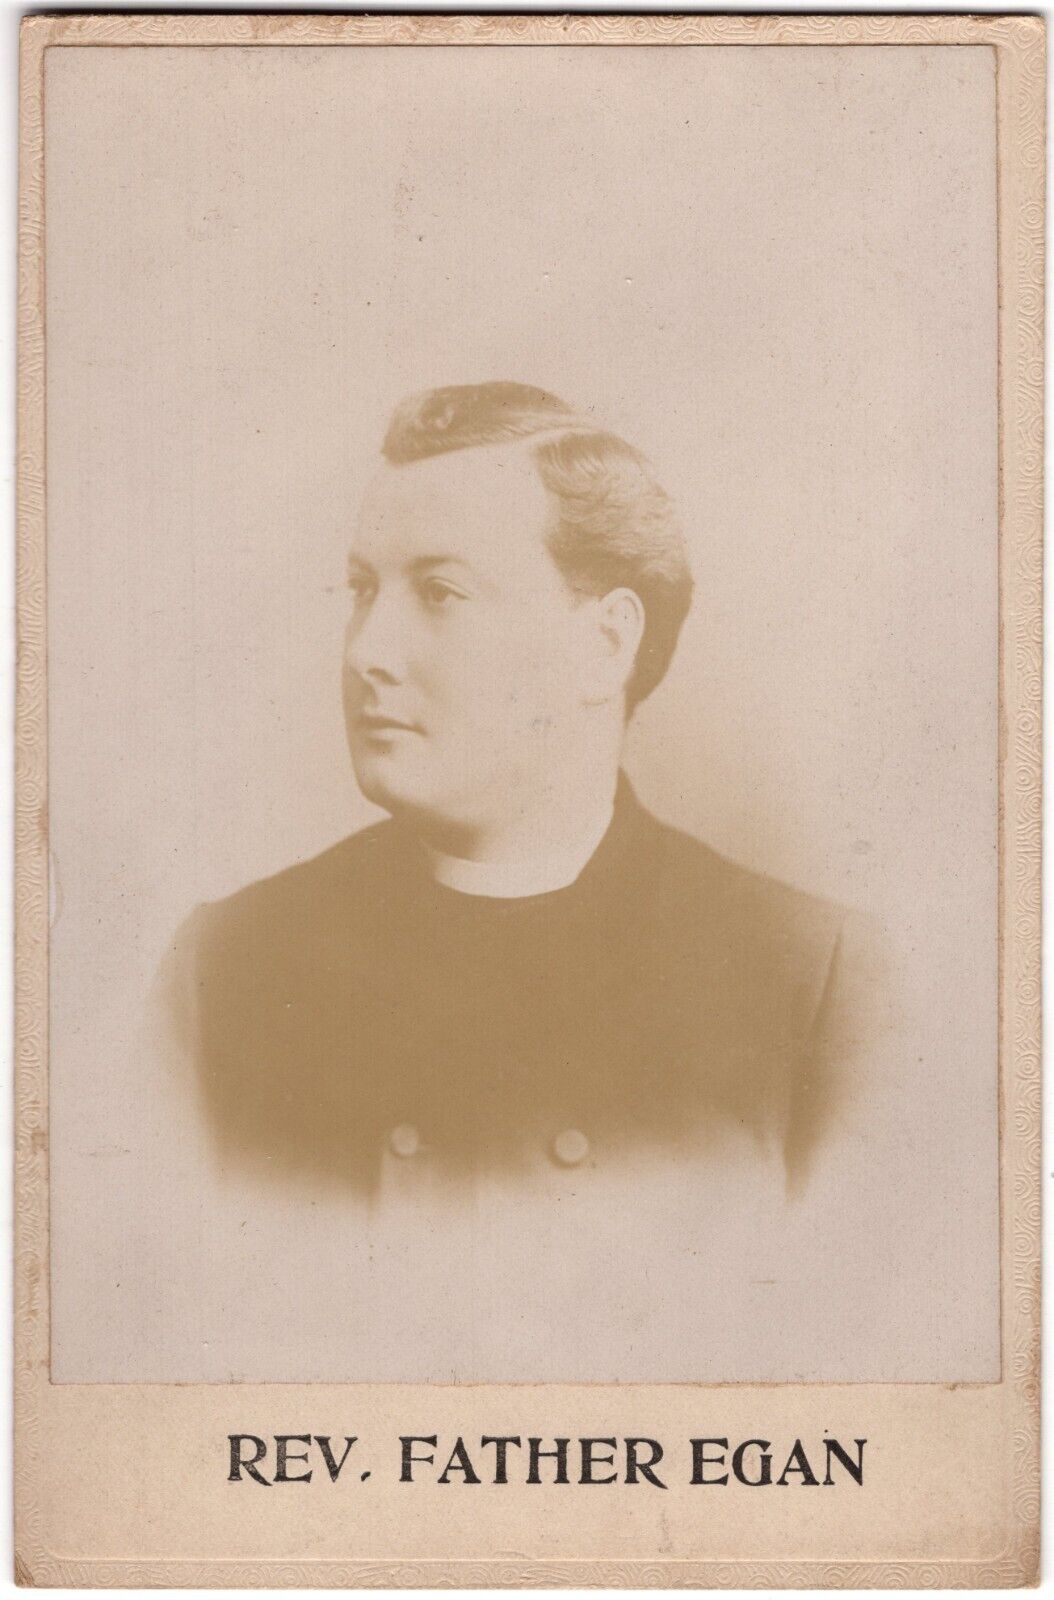 CIRCA 1890s CABINET CARD REVERAND FATHER EGAN CATHOLIC PREIST UNMARKED